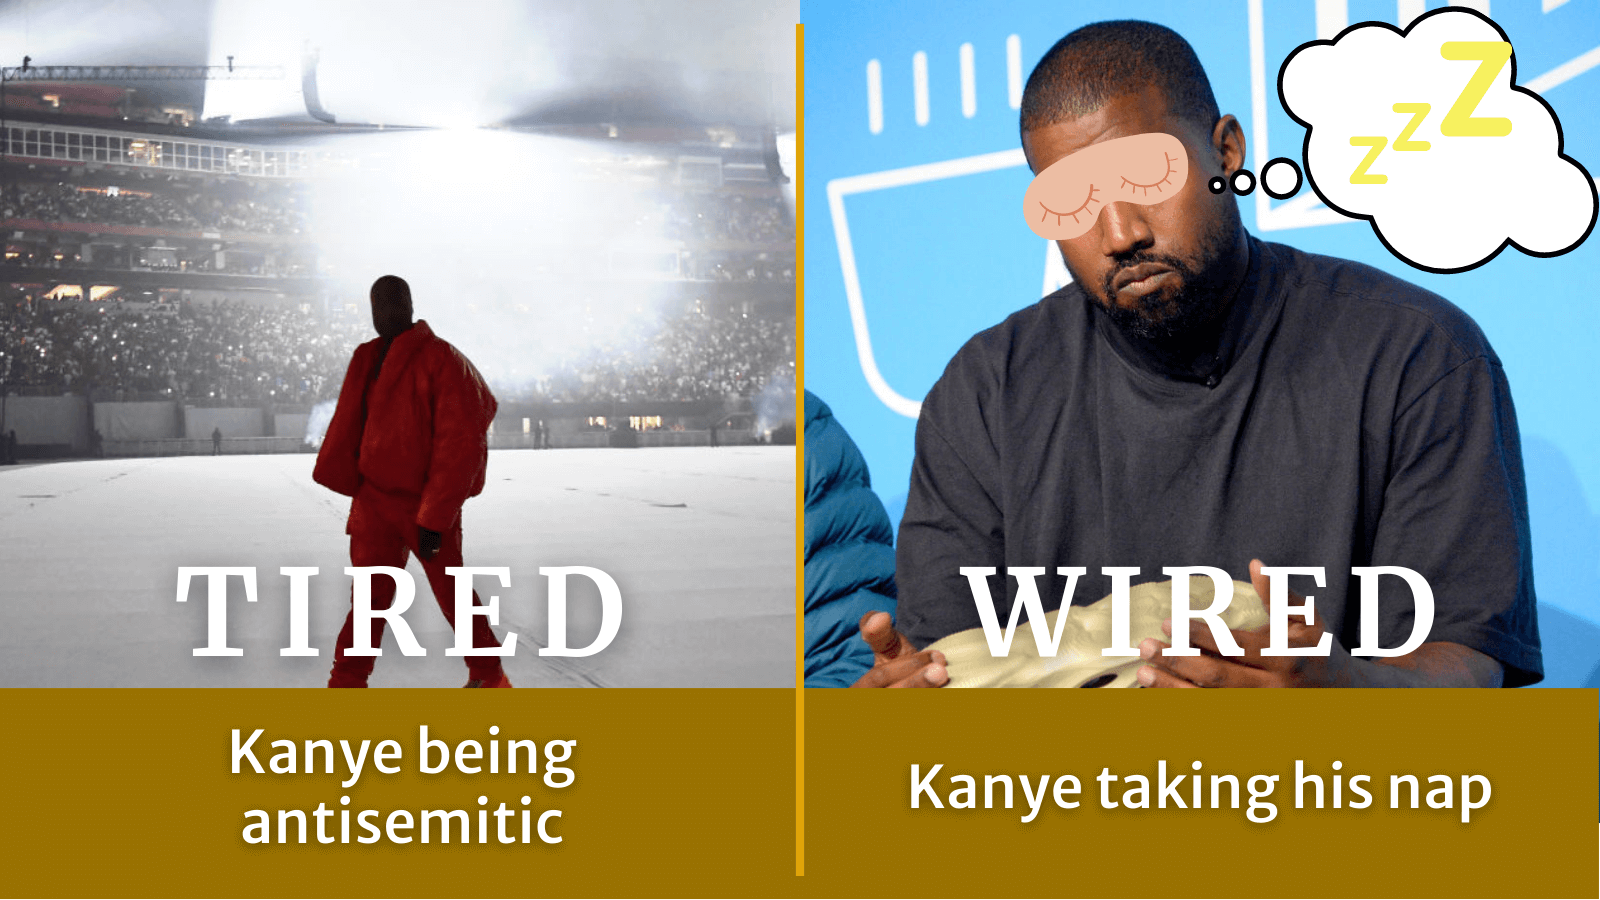 Tired: Kanye being antisemitic. Wired: Kanye taking his nap.